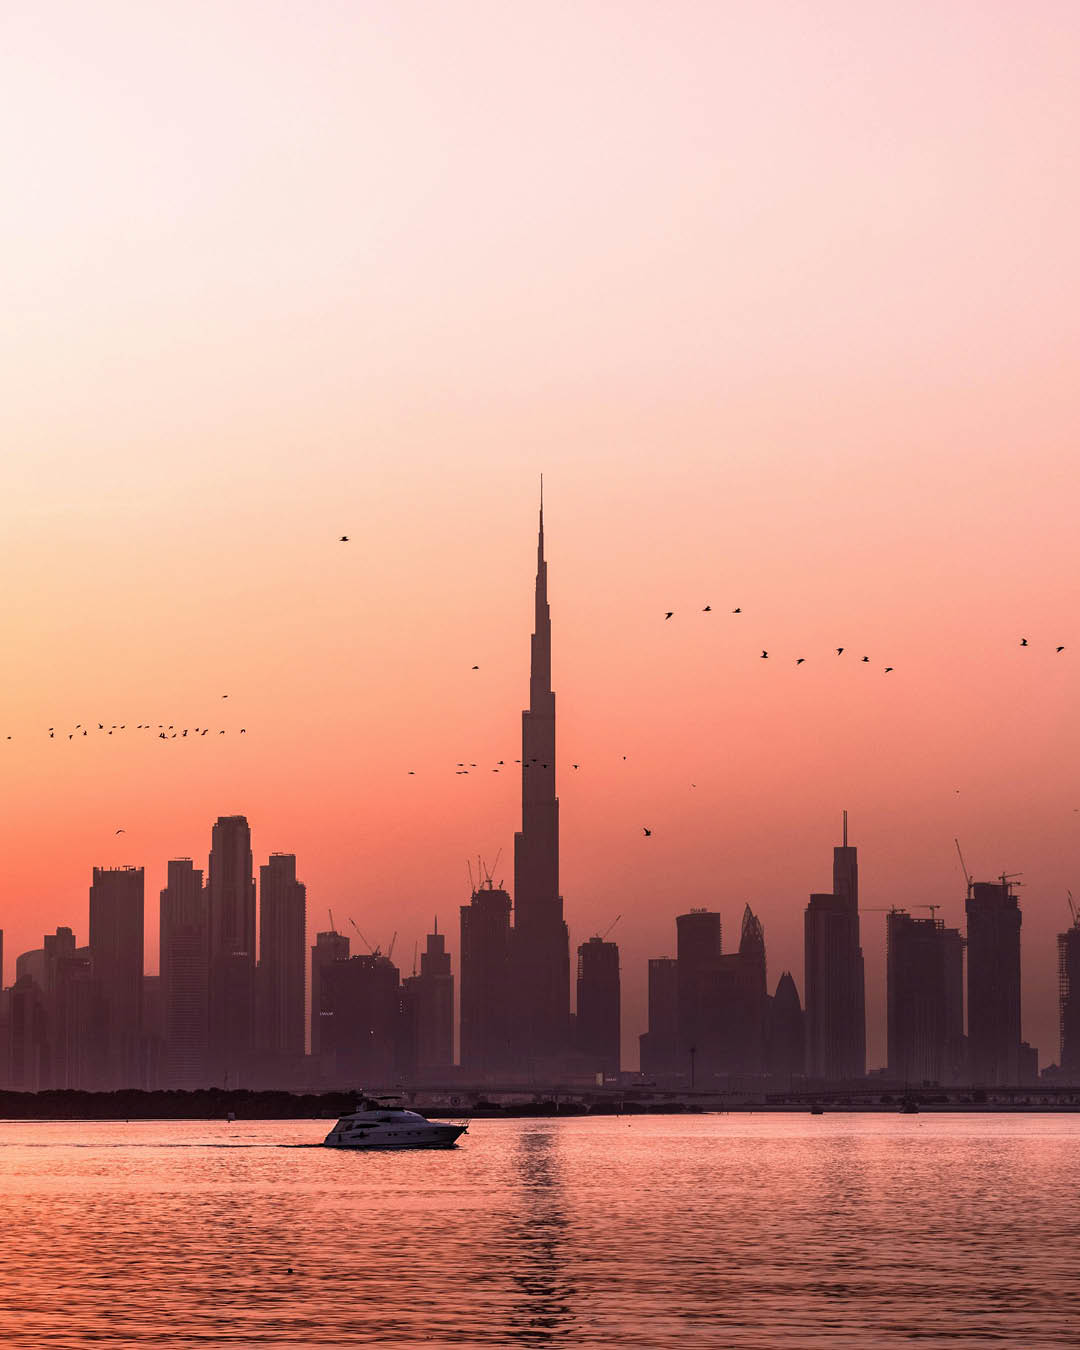 Sunset over the Dubai skyline and Burj Khalifa